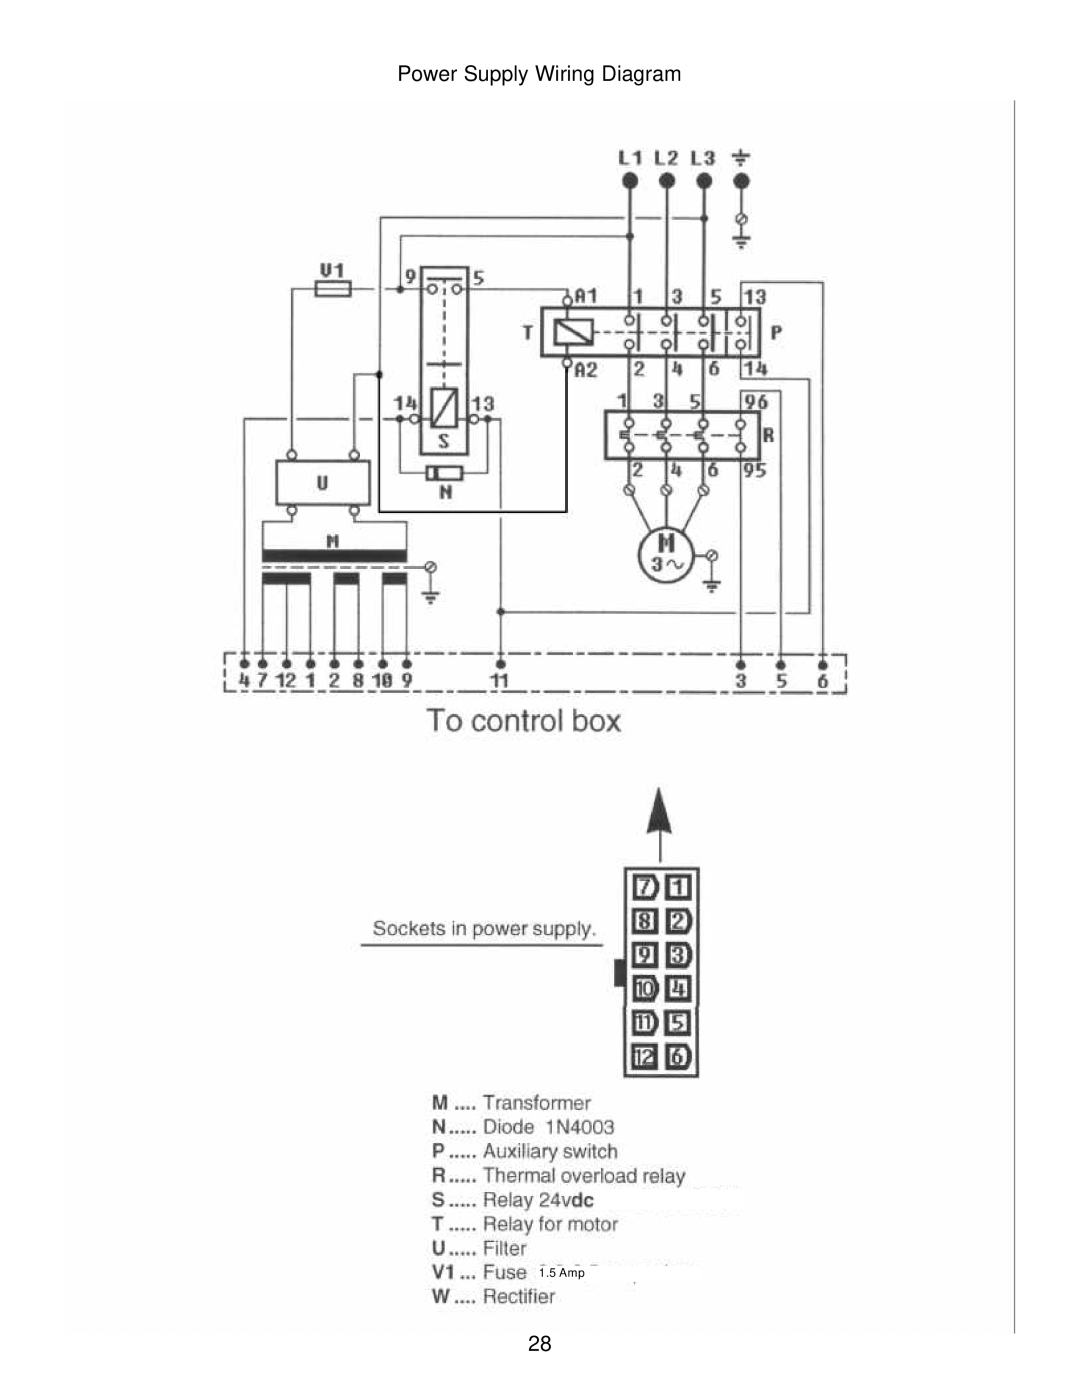 Varimixer W100, MK IV, 40, W80, 60 manual Power Supply Wiring Diagram, 1.5 Amp 